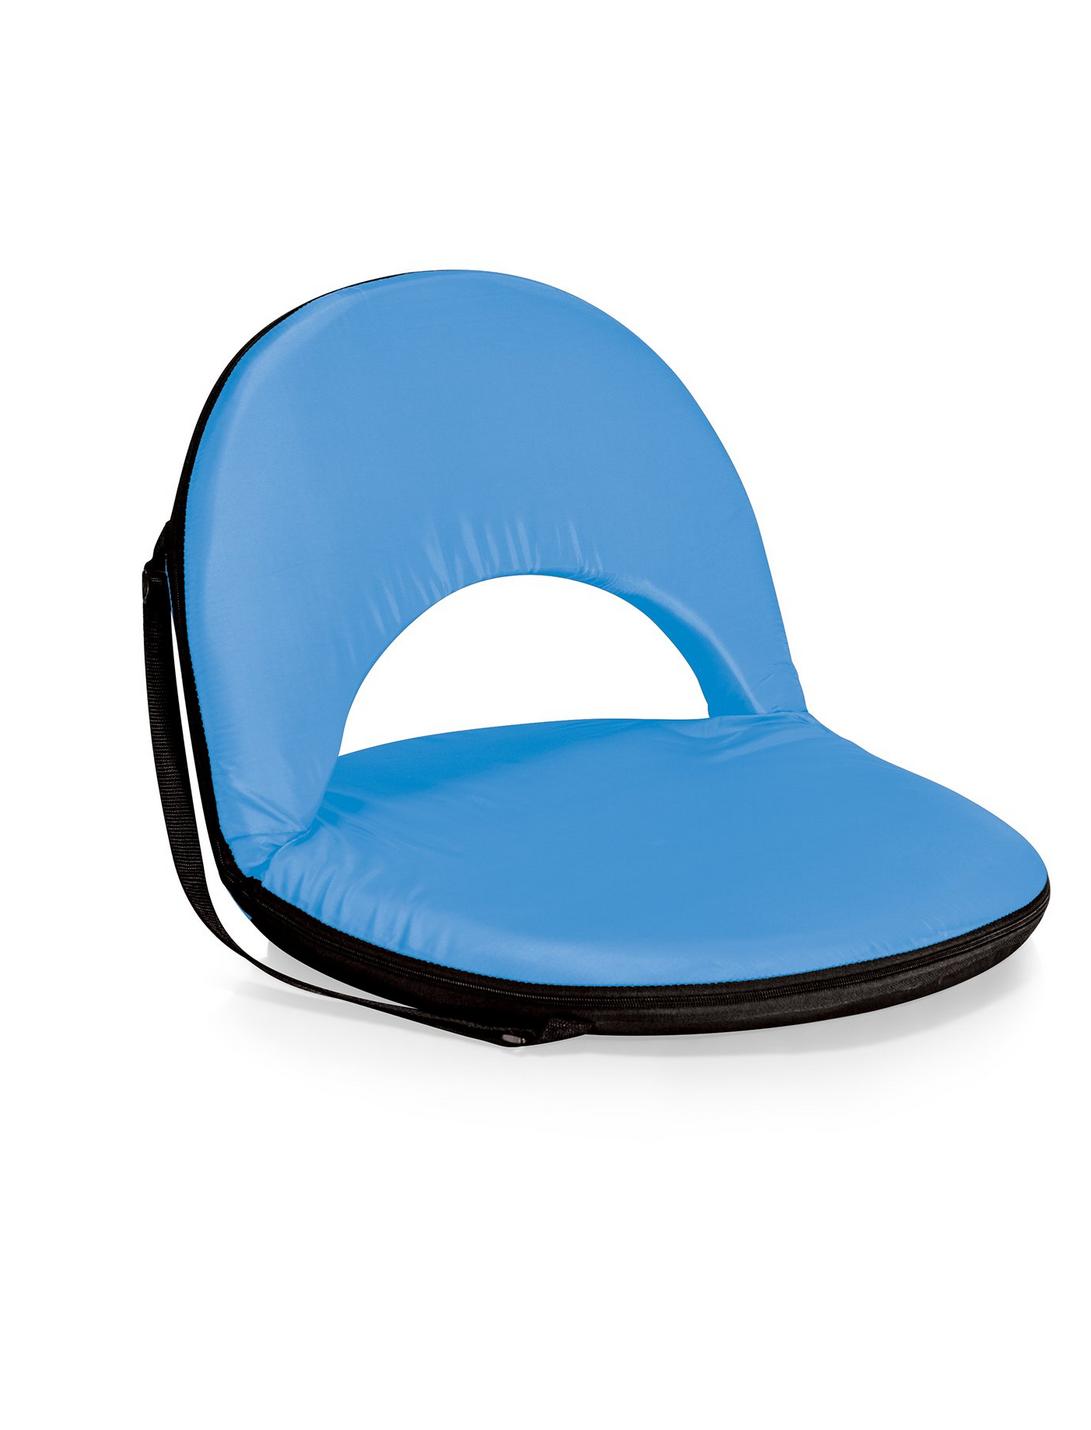 Oniva Portable Sky Blue Reclining Seat, , hi-res